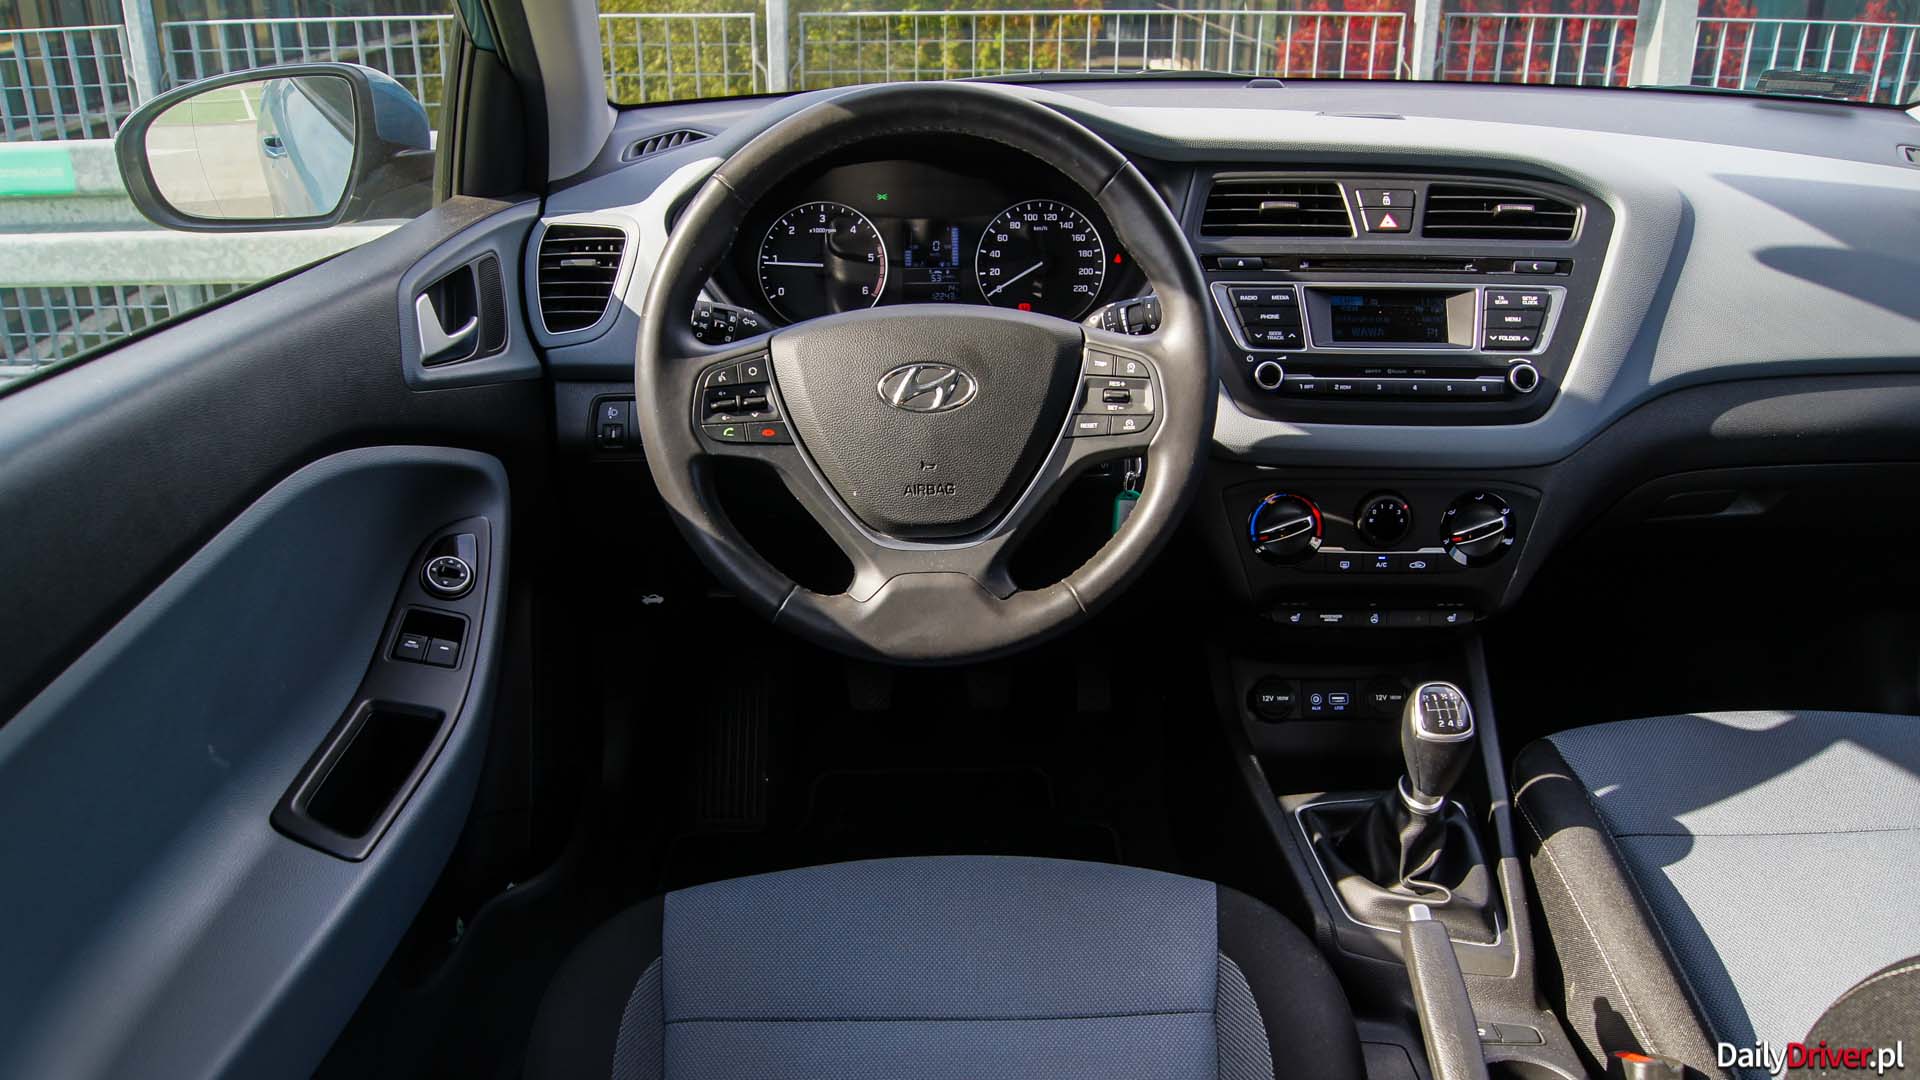 Test Hyundai I20 Coupe 1.1 Crdi – Dailydriver.pl